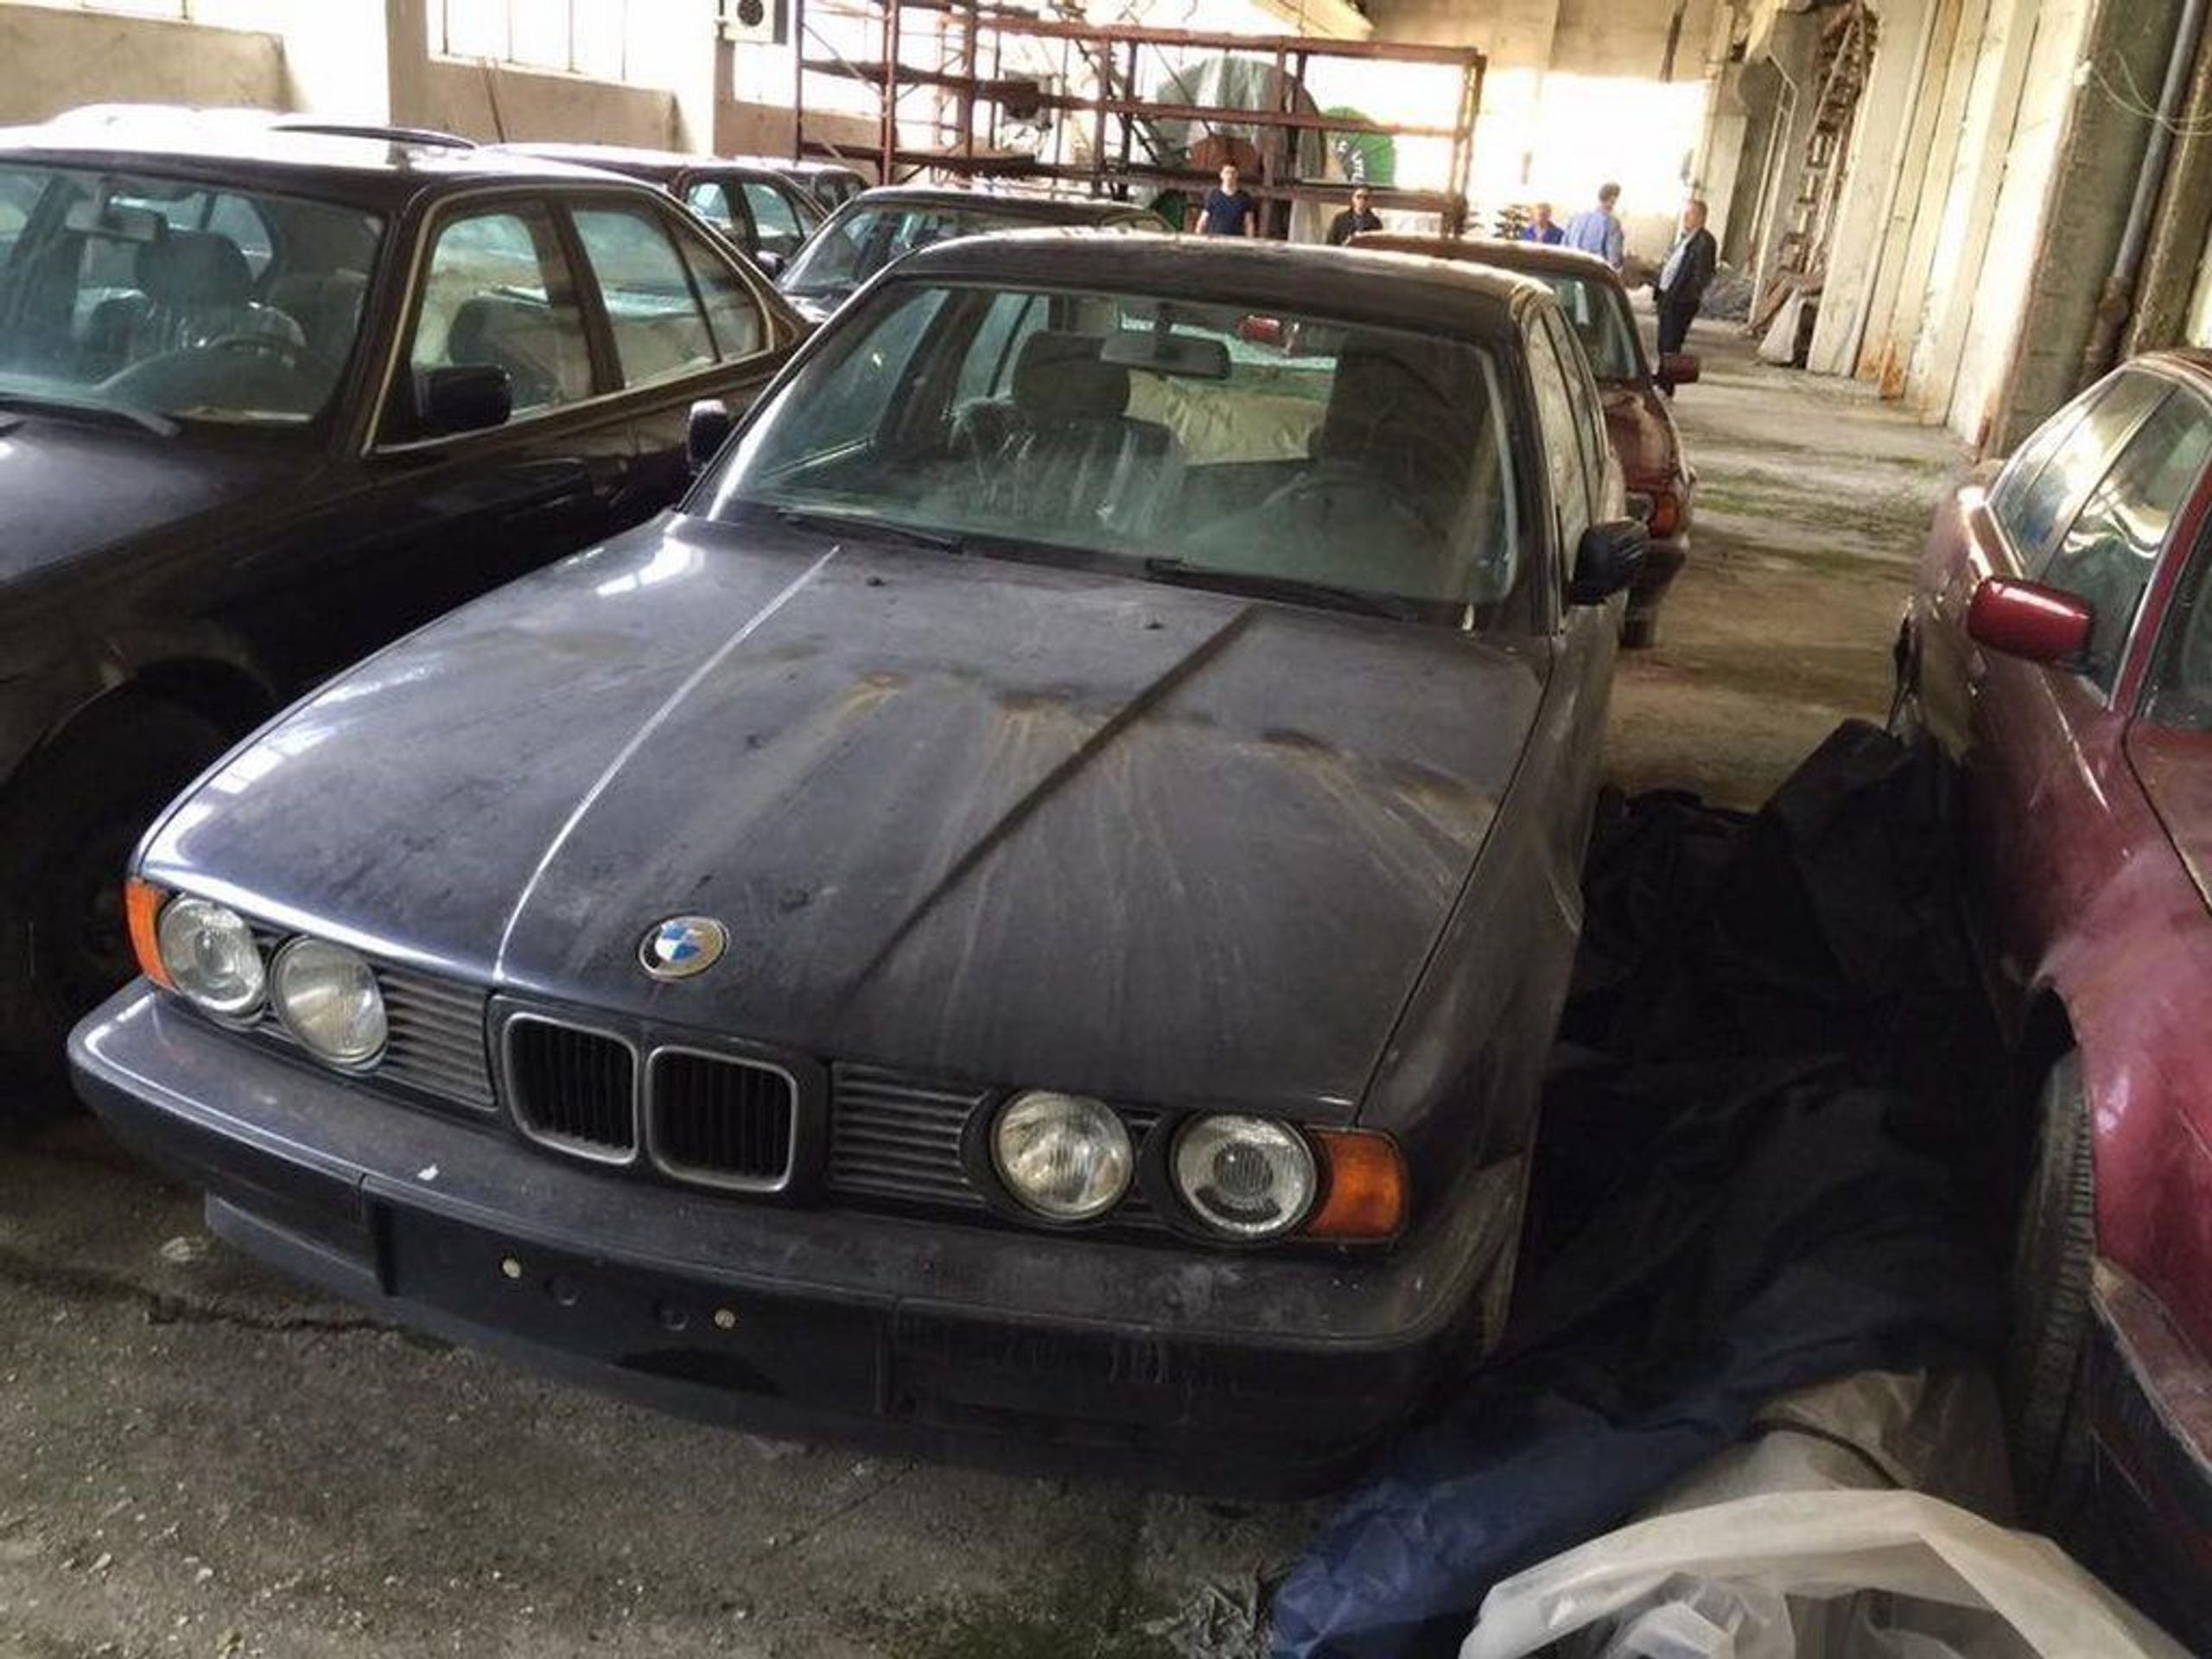 Sklad 25 let ukrýval 11 vozů BMW řady 5 - 31 - Fotogalerie: V bulharském skladu se 25 let skrýval poklad (6/16)